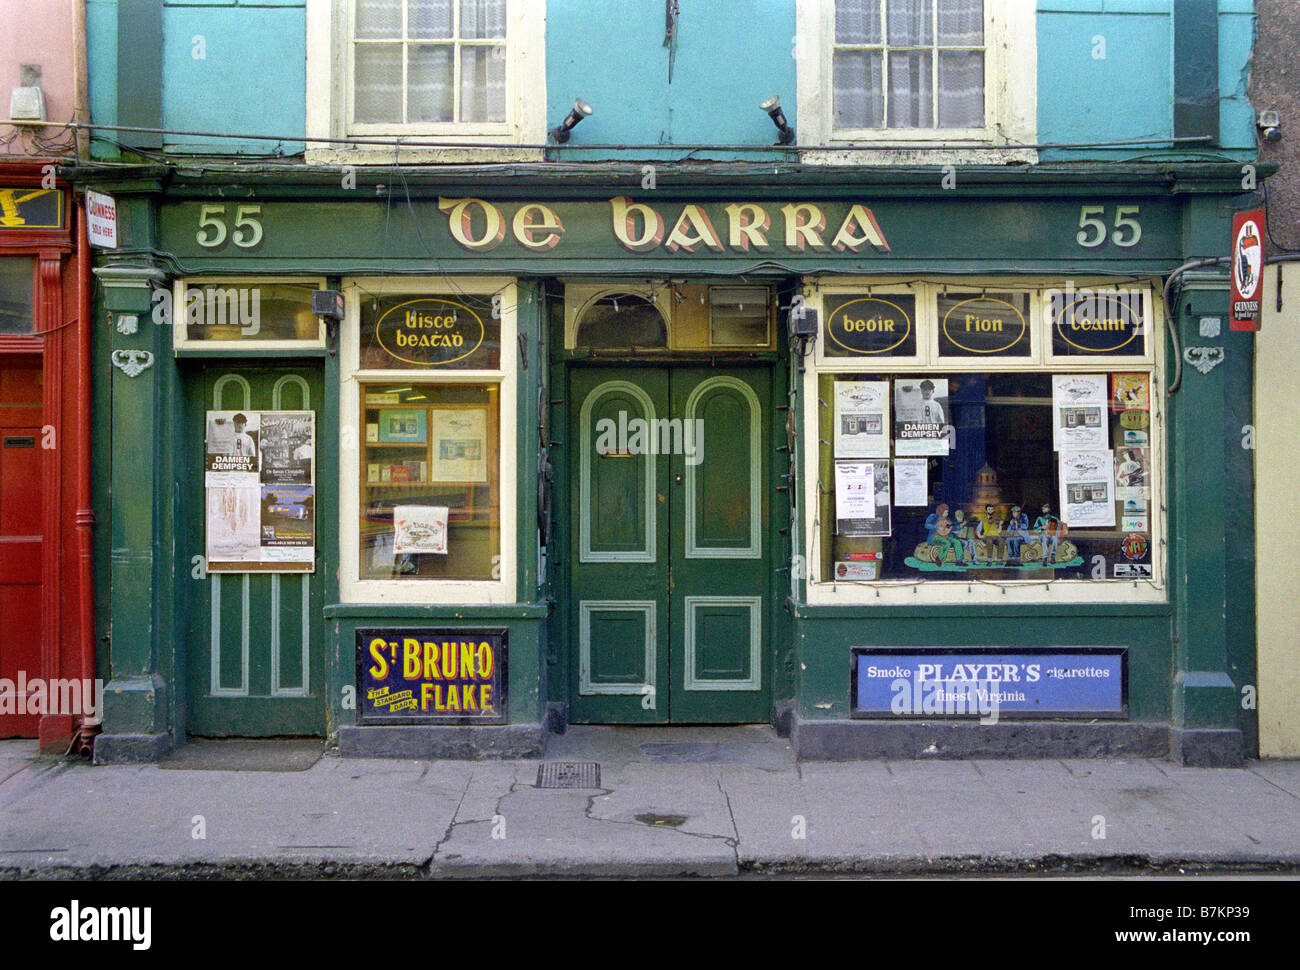 de Barra Irish music pub Ireland Stock Photo